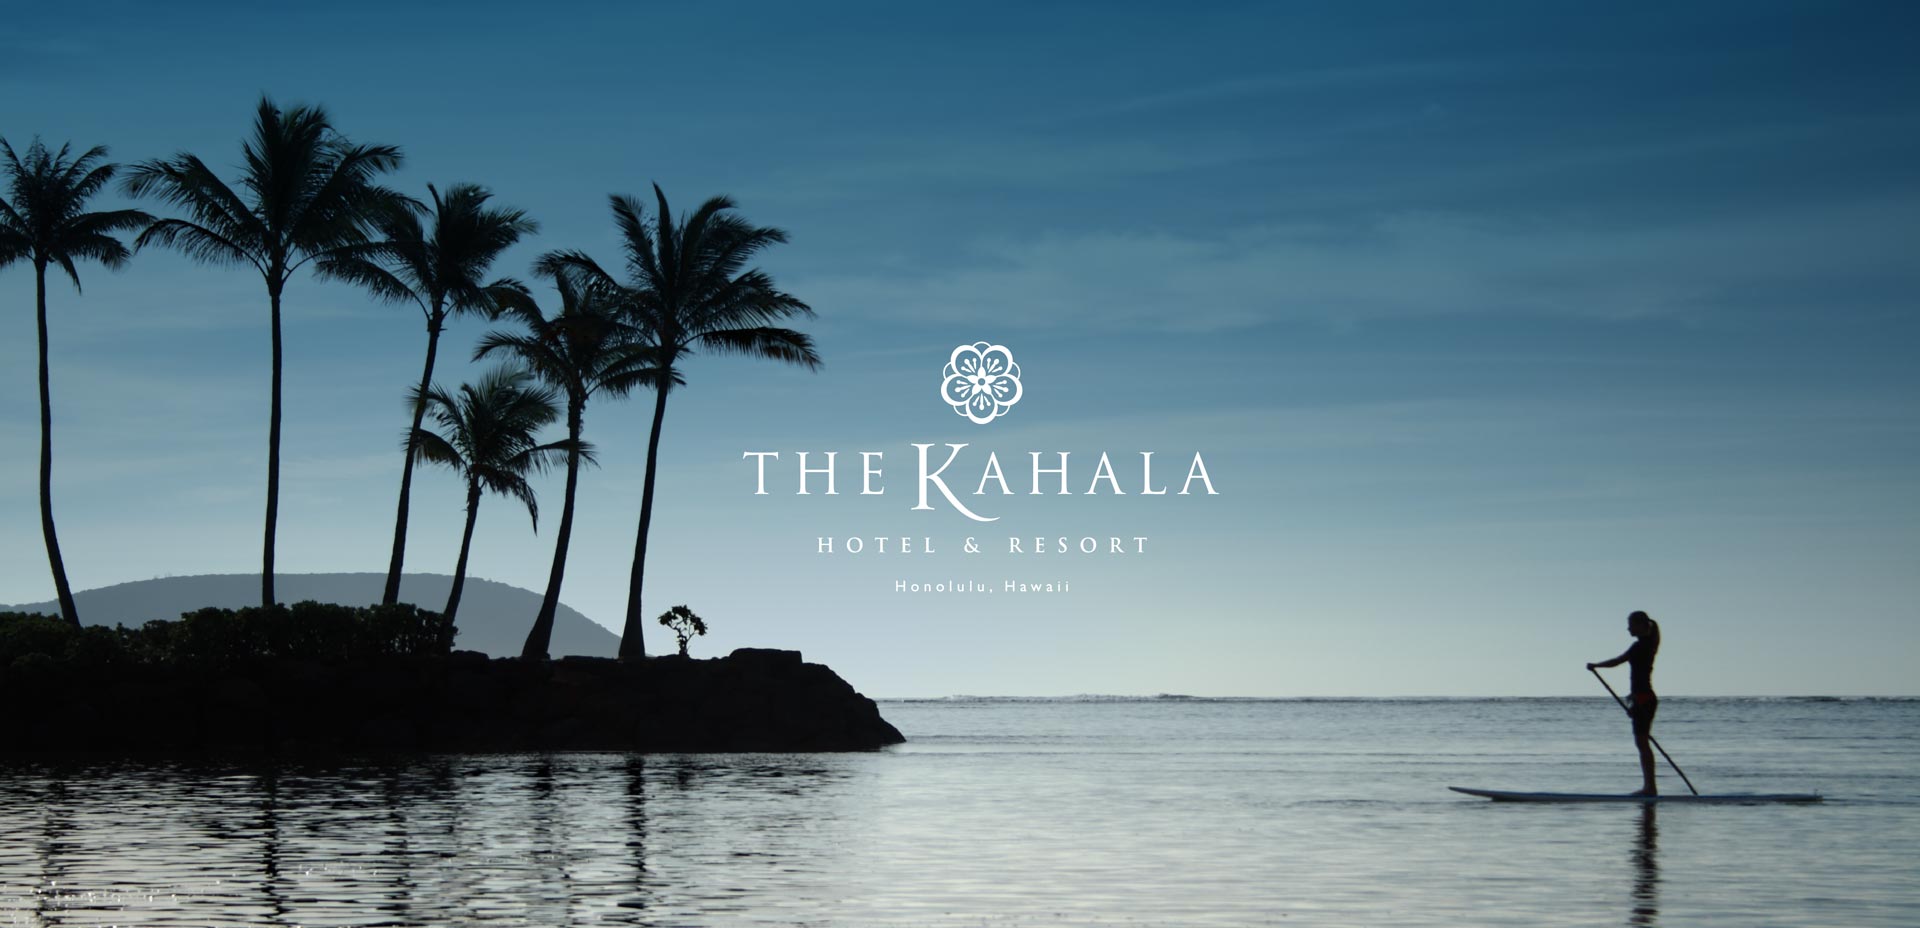 A digital transformation for Hawaii’s finest luxury hotel